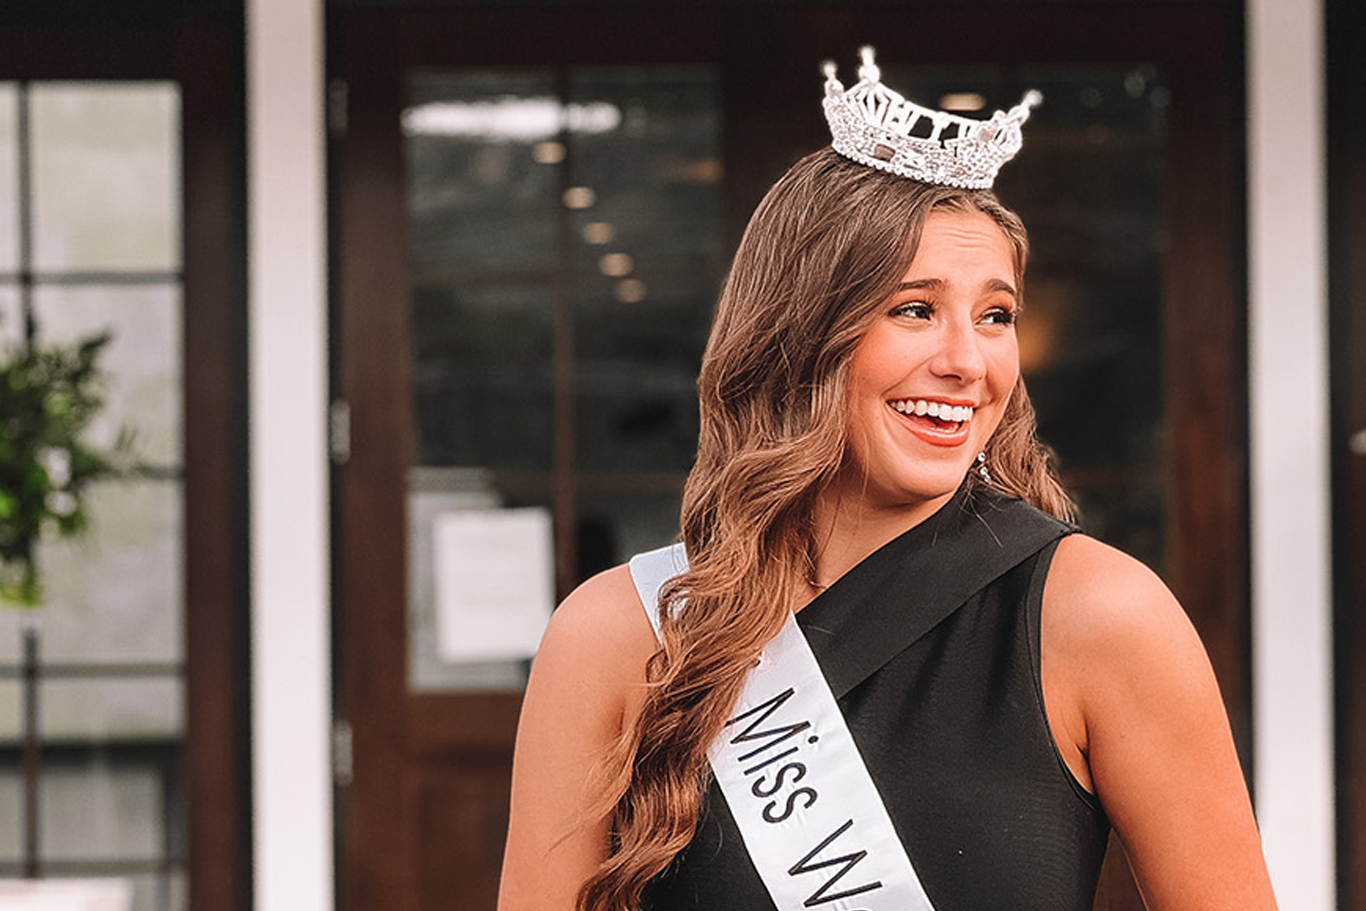 Digital Media Management student wins Miss Minnesota 2023